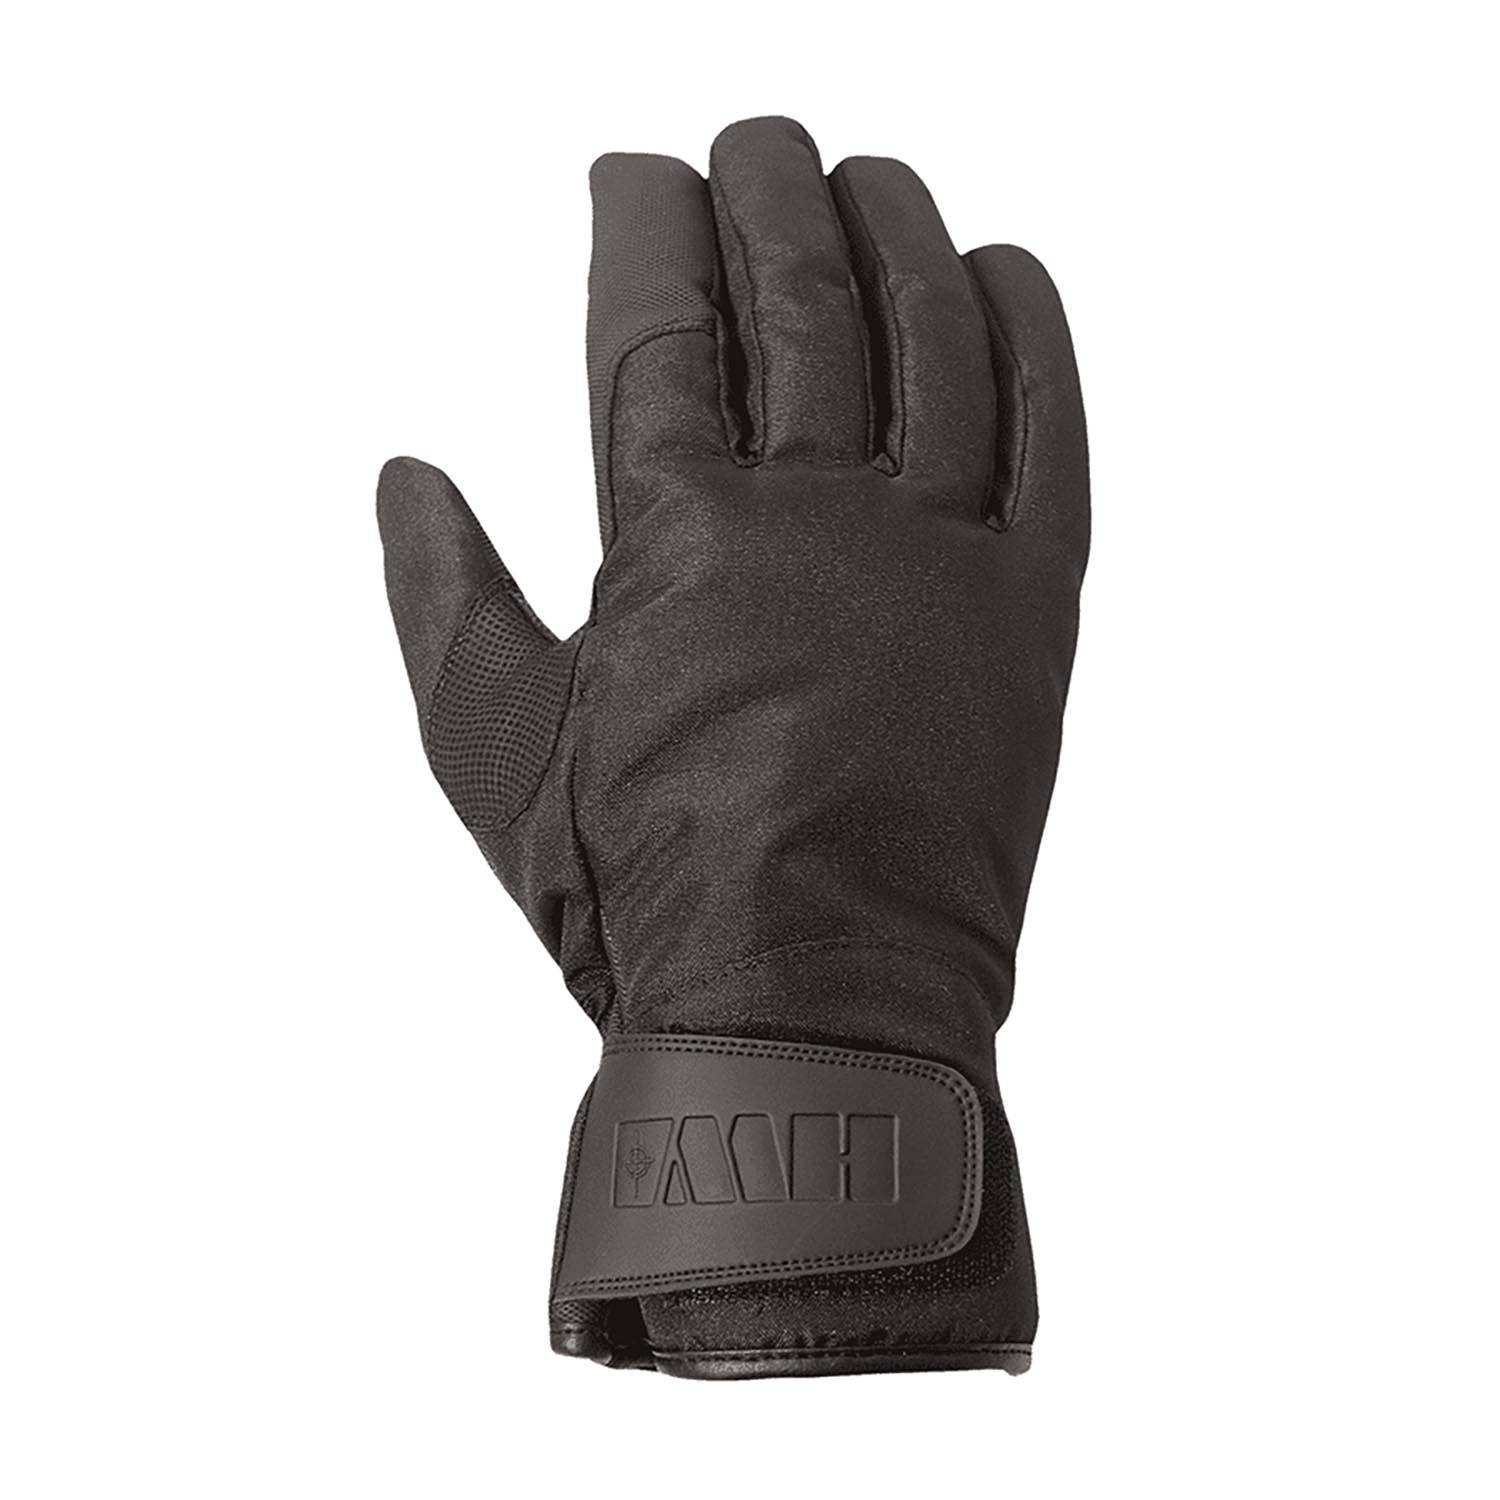 HWI Long Gauntlet Insulated Waterproof Duty Gloves